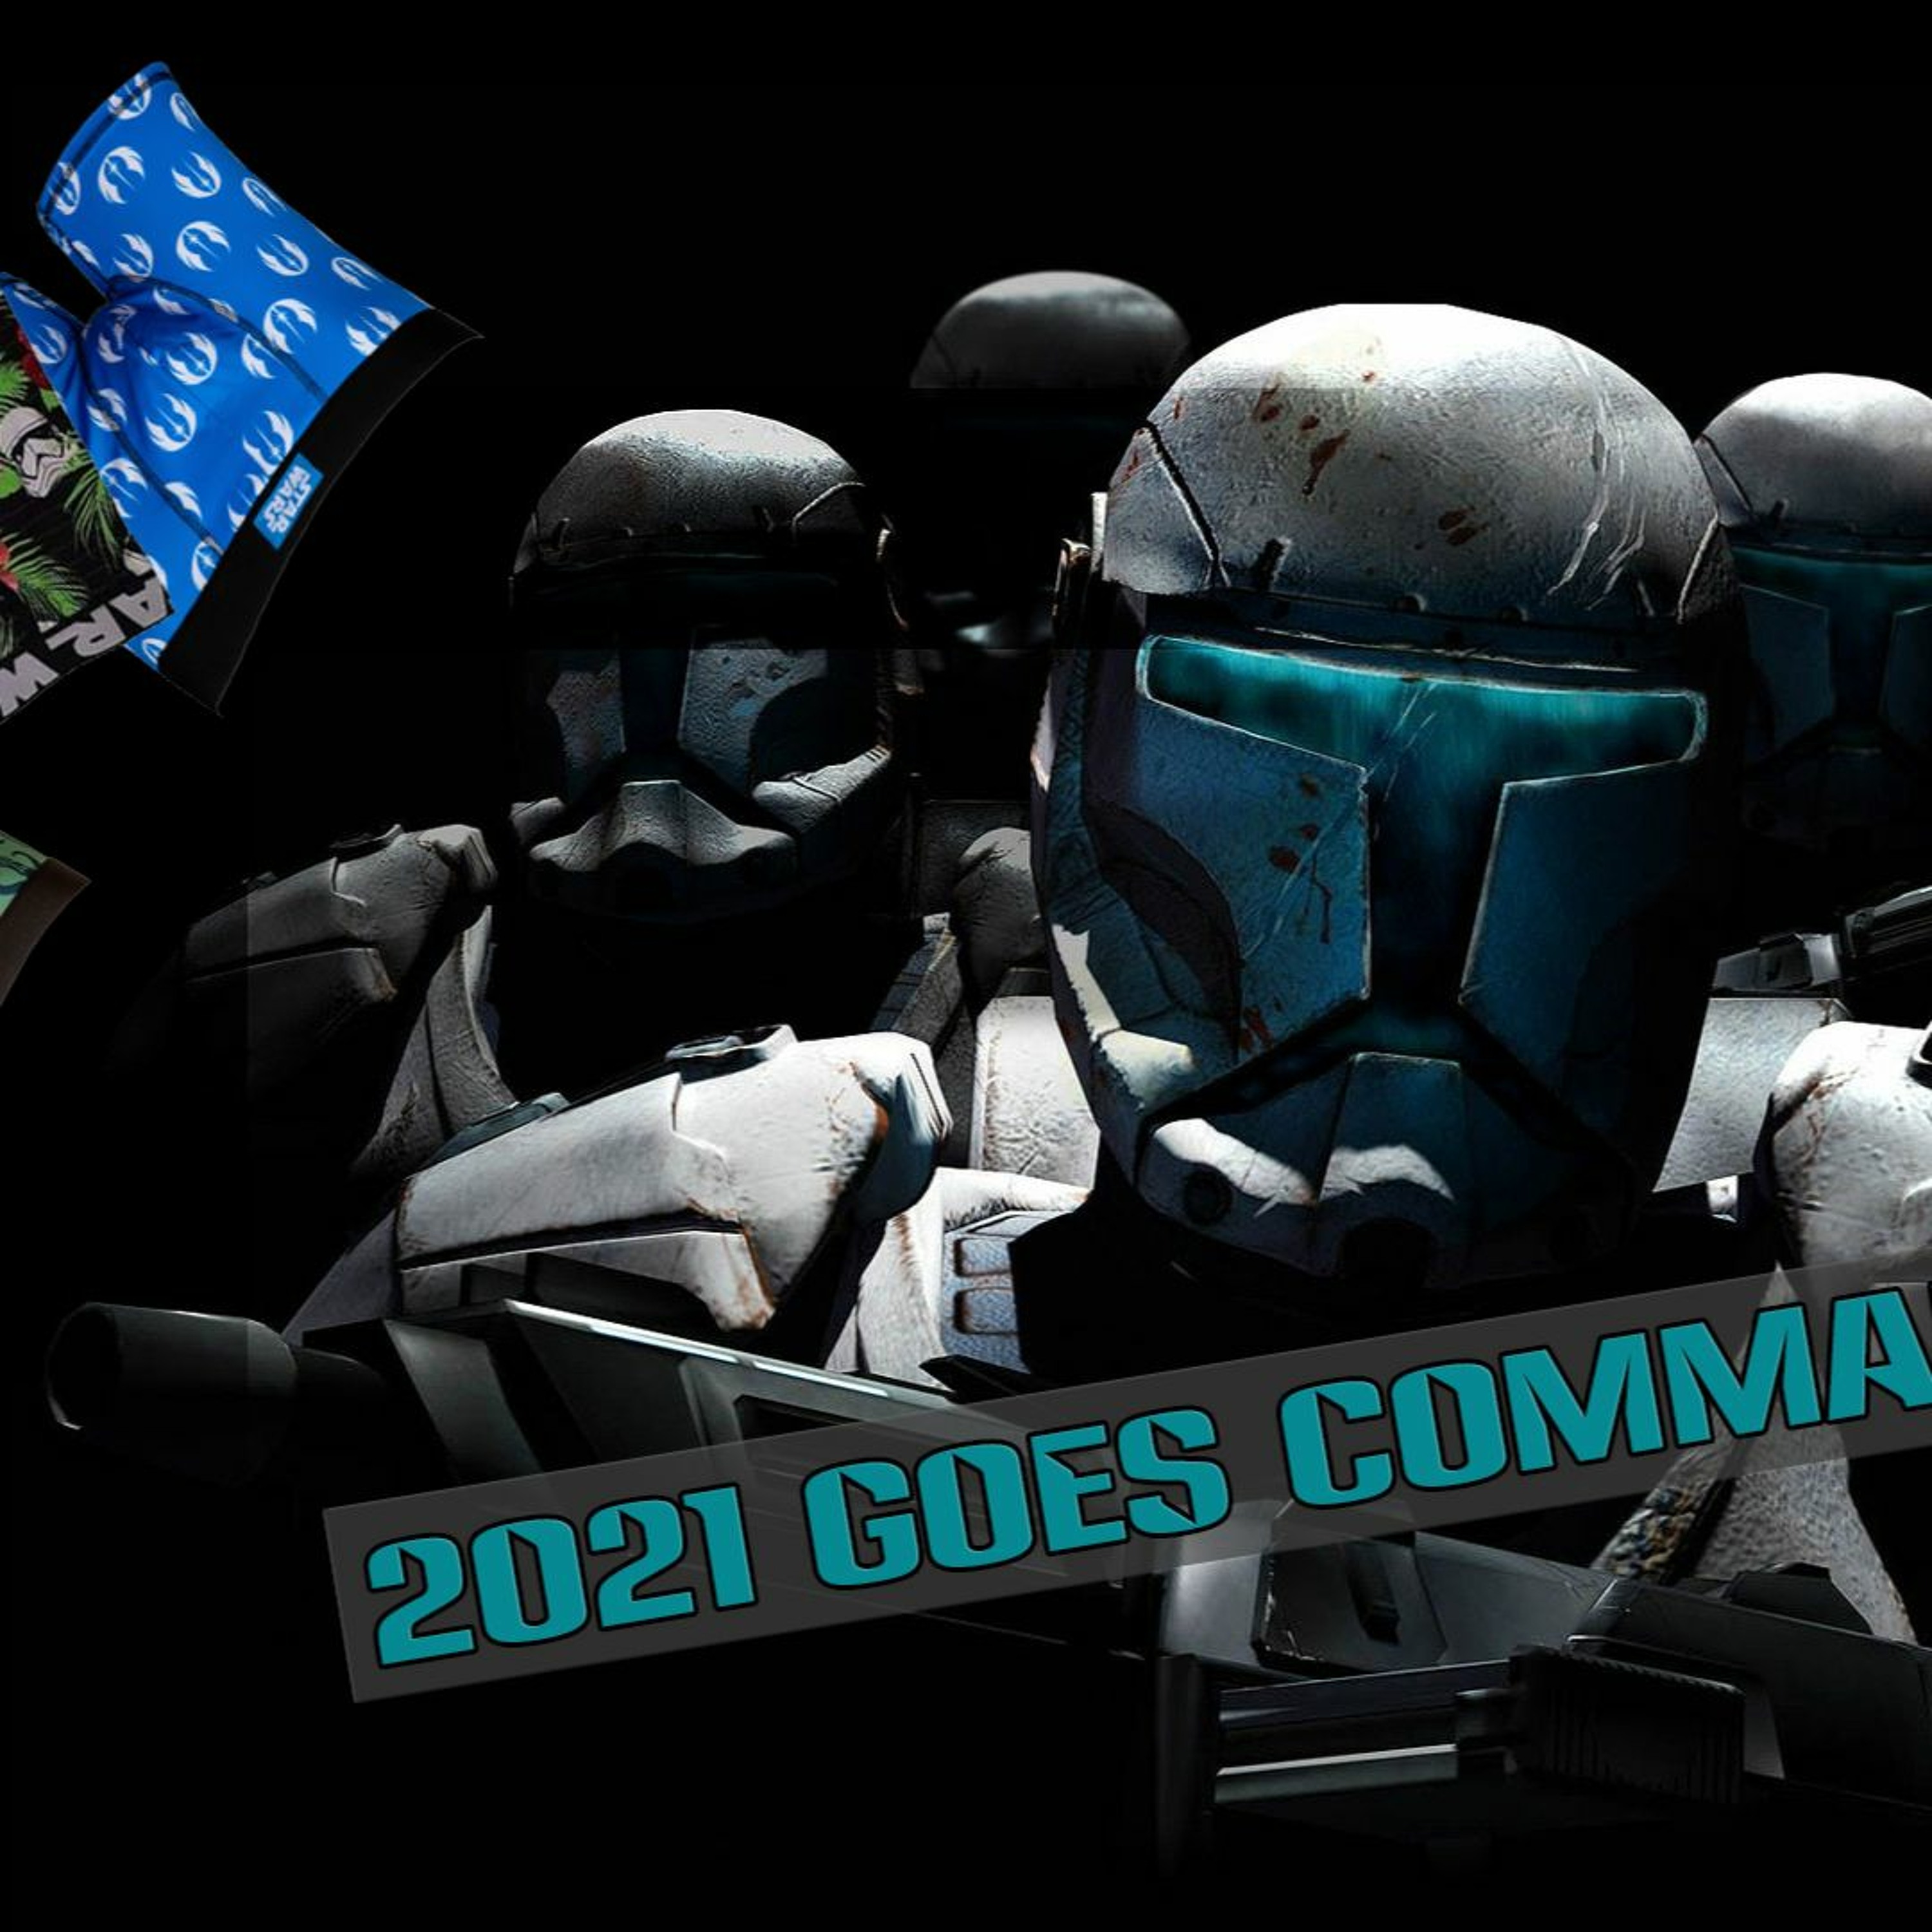 Holonet Headlines 2 - 2021 Goes Commando